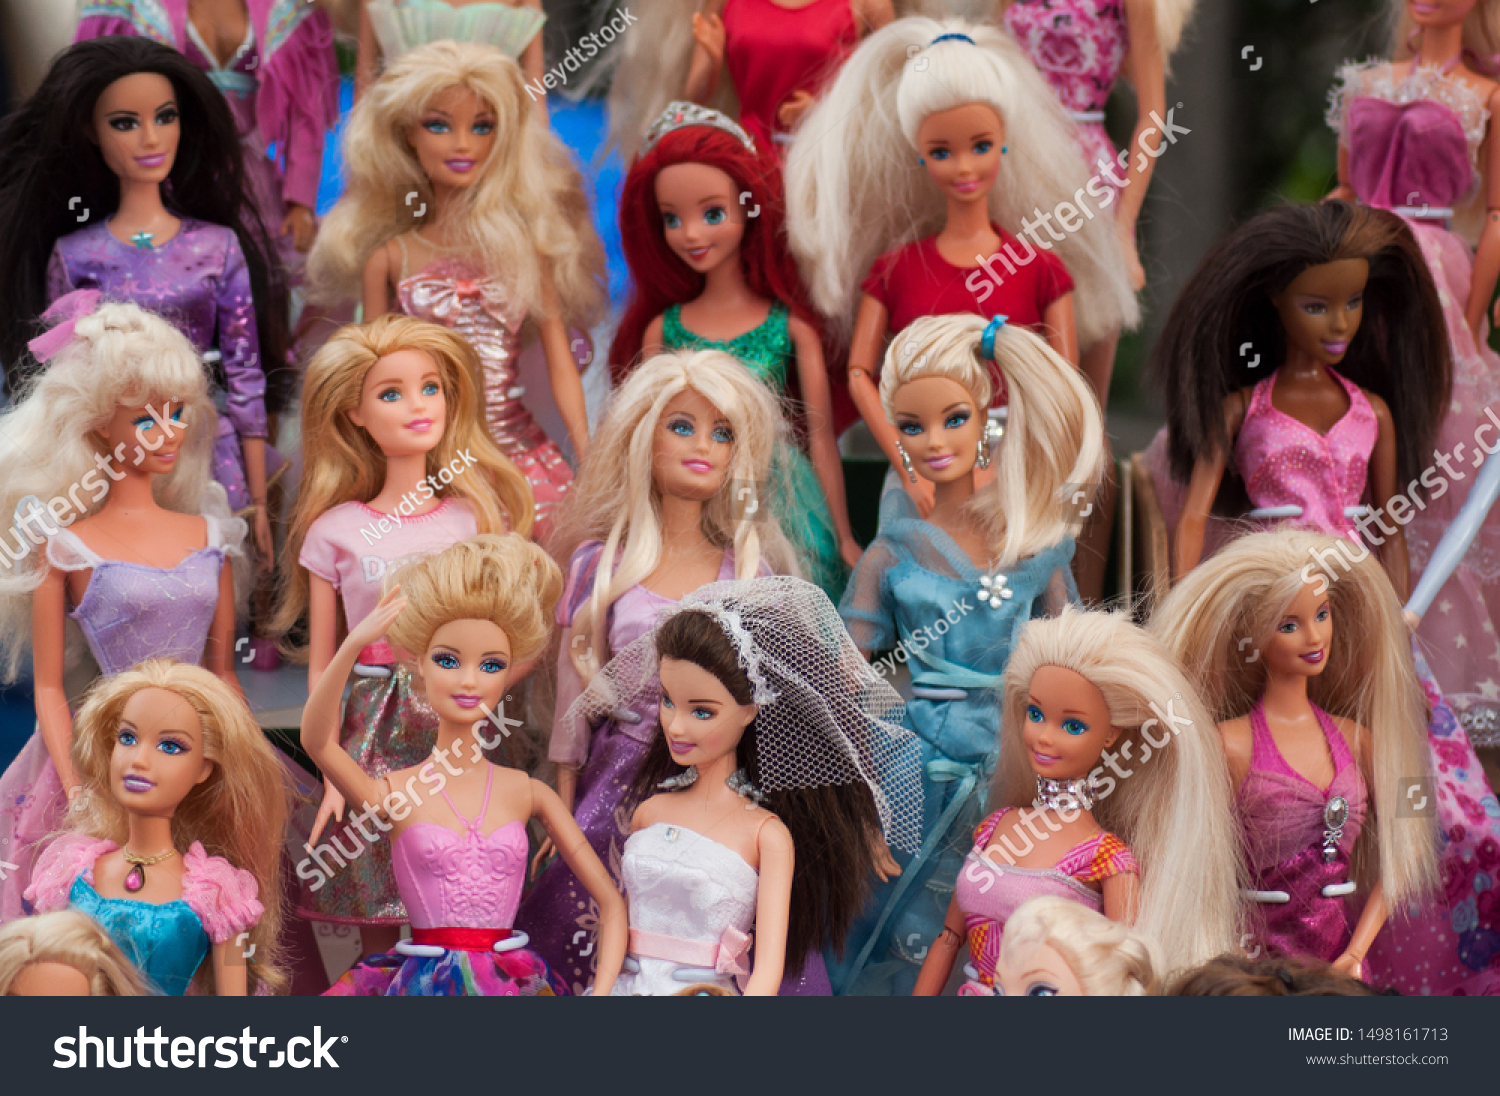 Barbie Pics